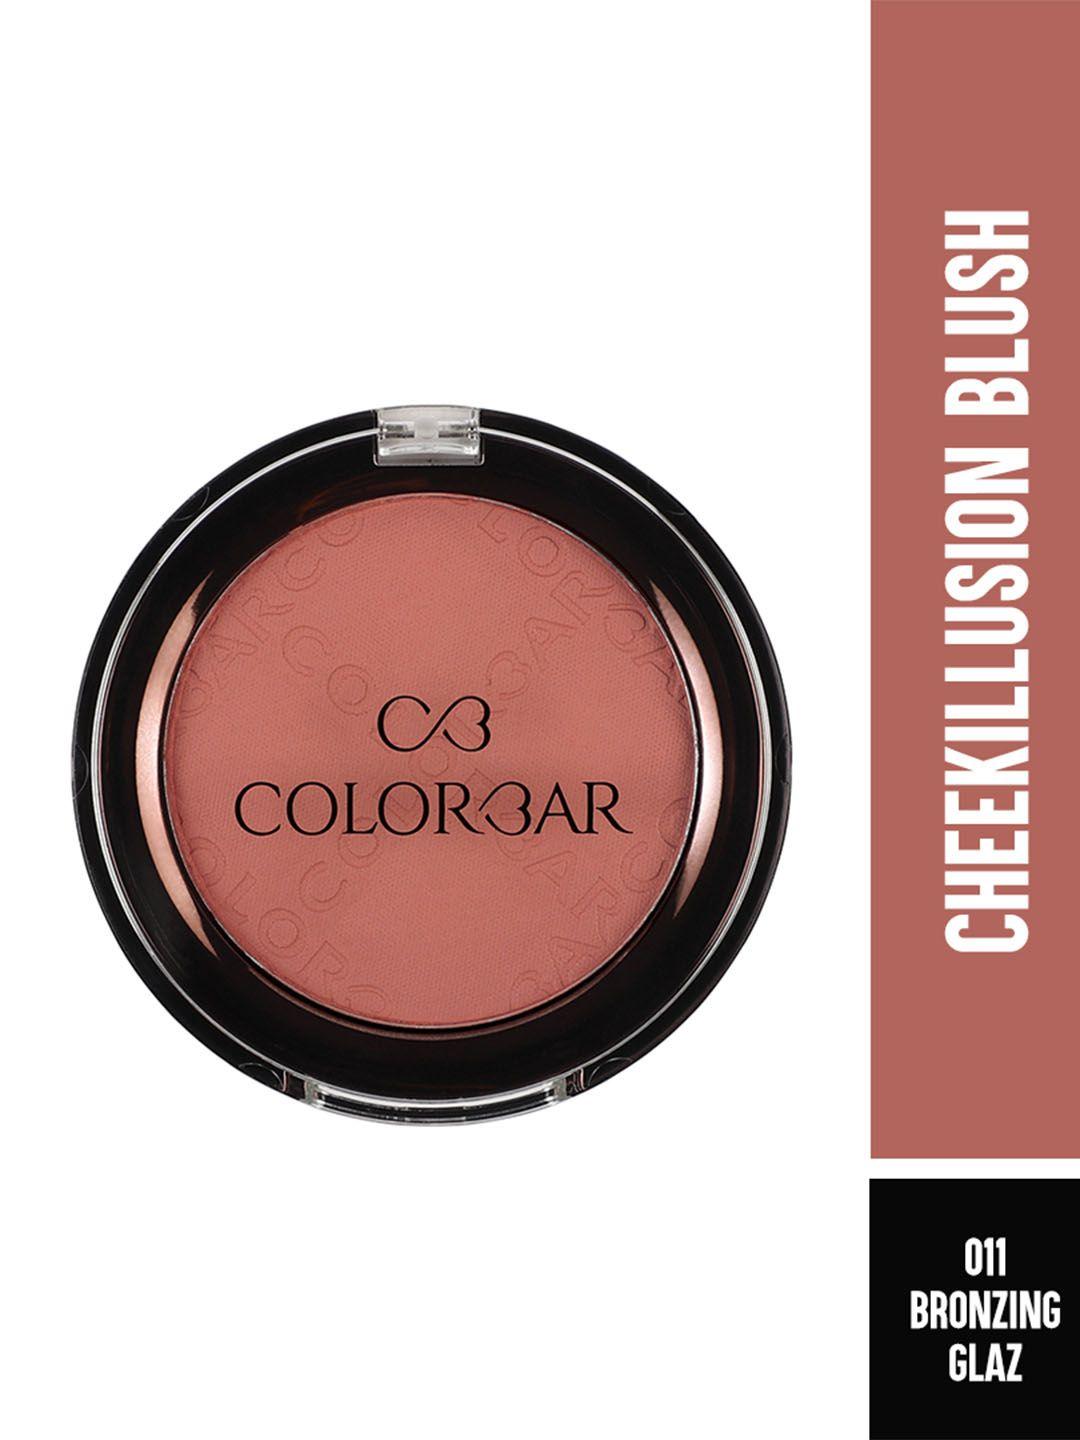 colorbar cheekillusion blush 4 g - bronzing glaze 011